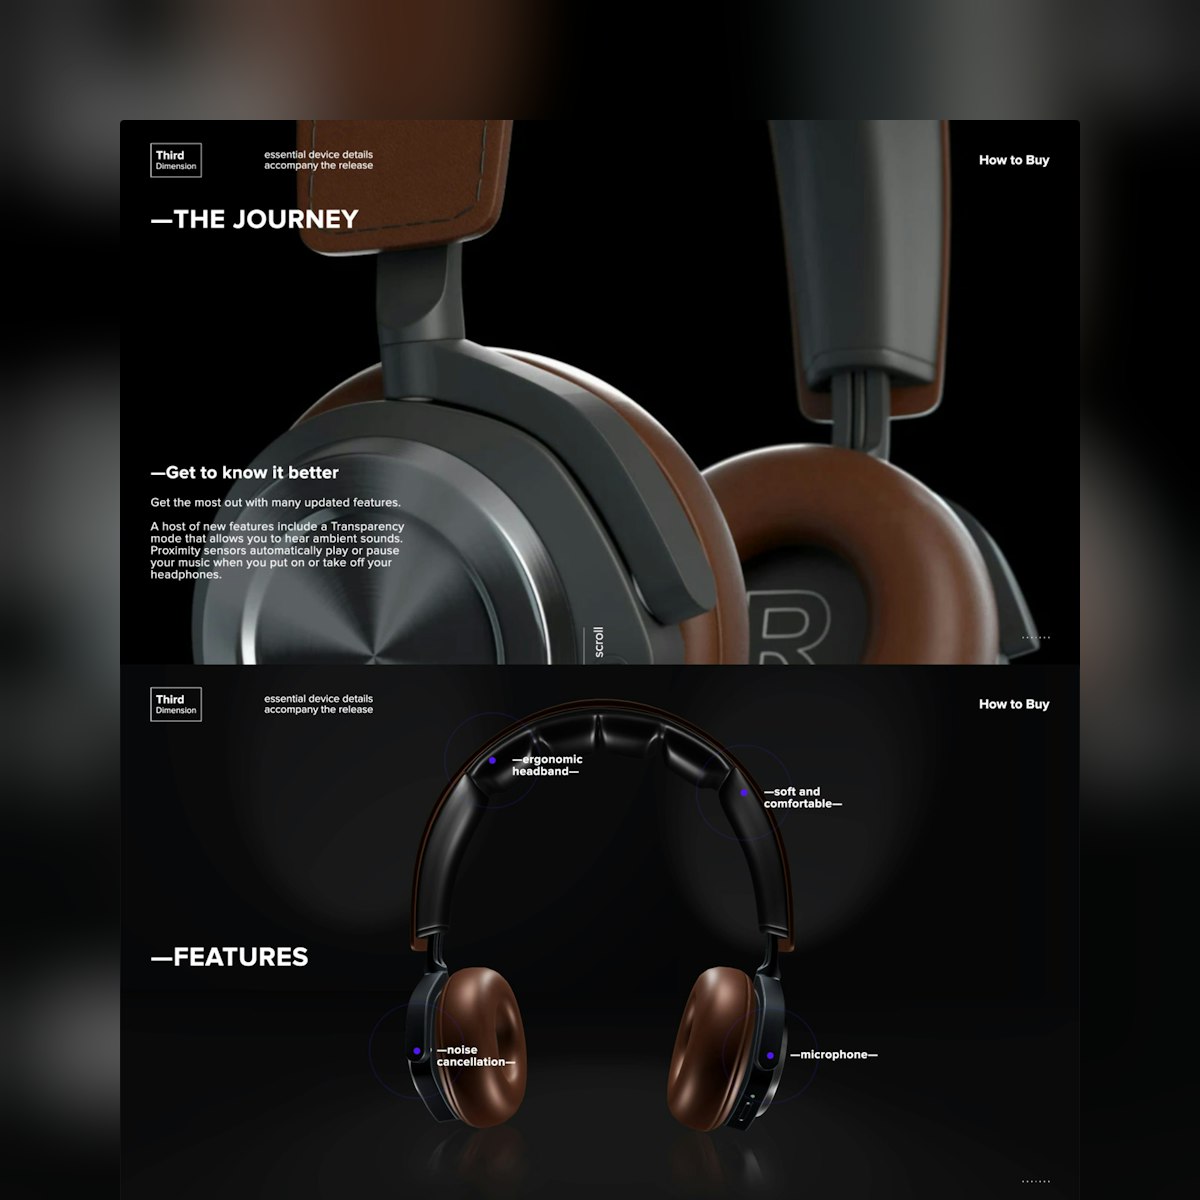 Product Page screen design idea #311: Website Inspiration: Third Dimension Headphones